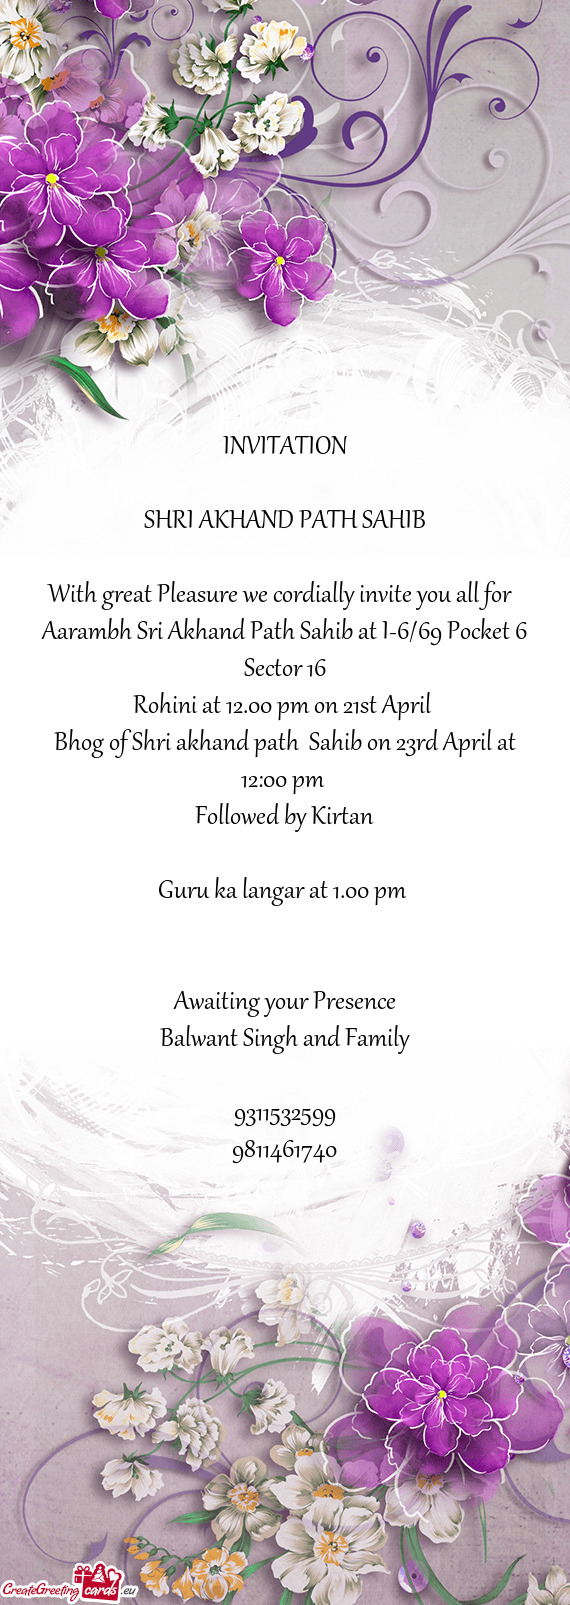 Aarambh Sri Akhand Path Sahib at I-6/69 Pocket 6 Sector 16